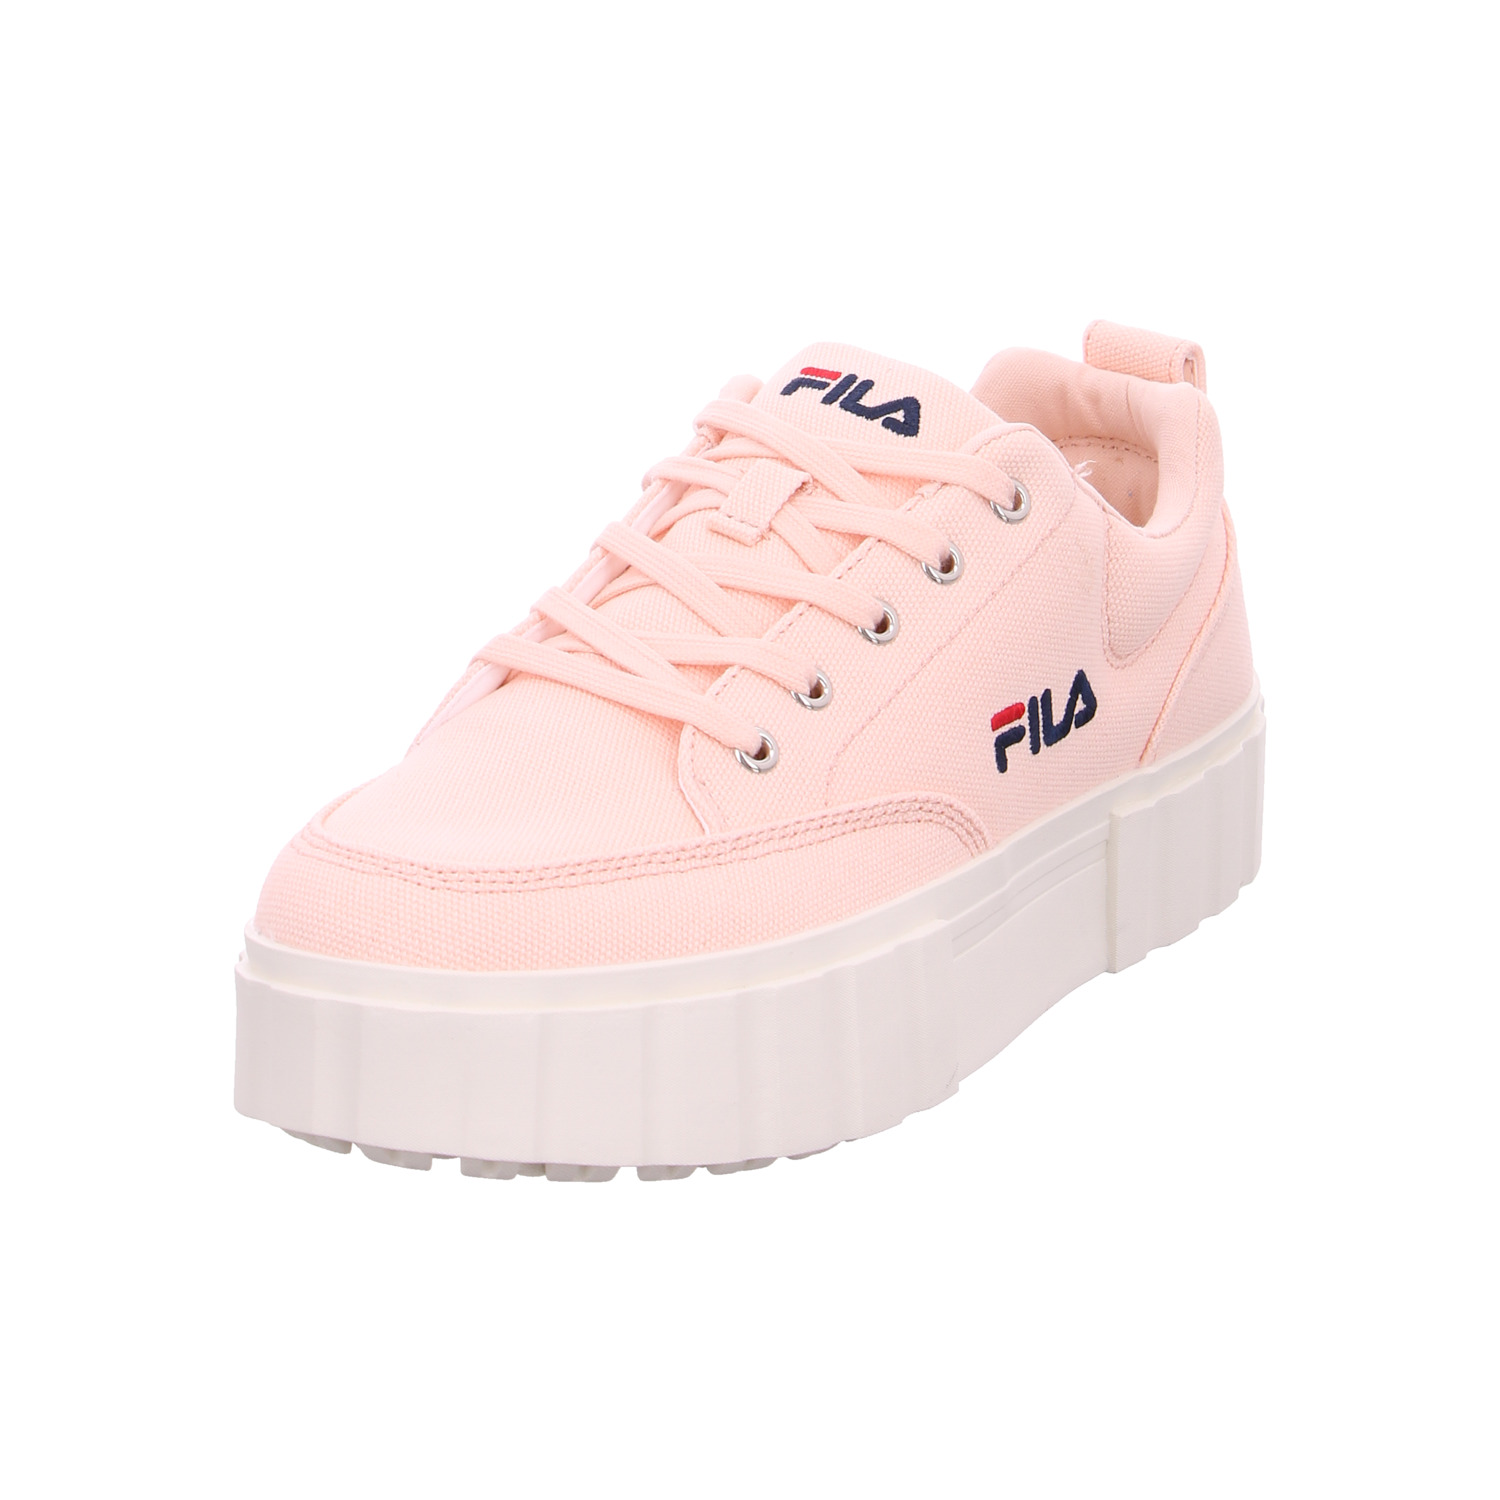 fila-sneaker-rosa-119150-36